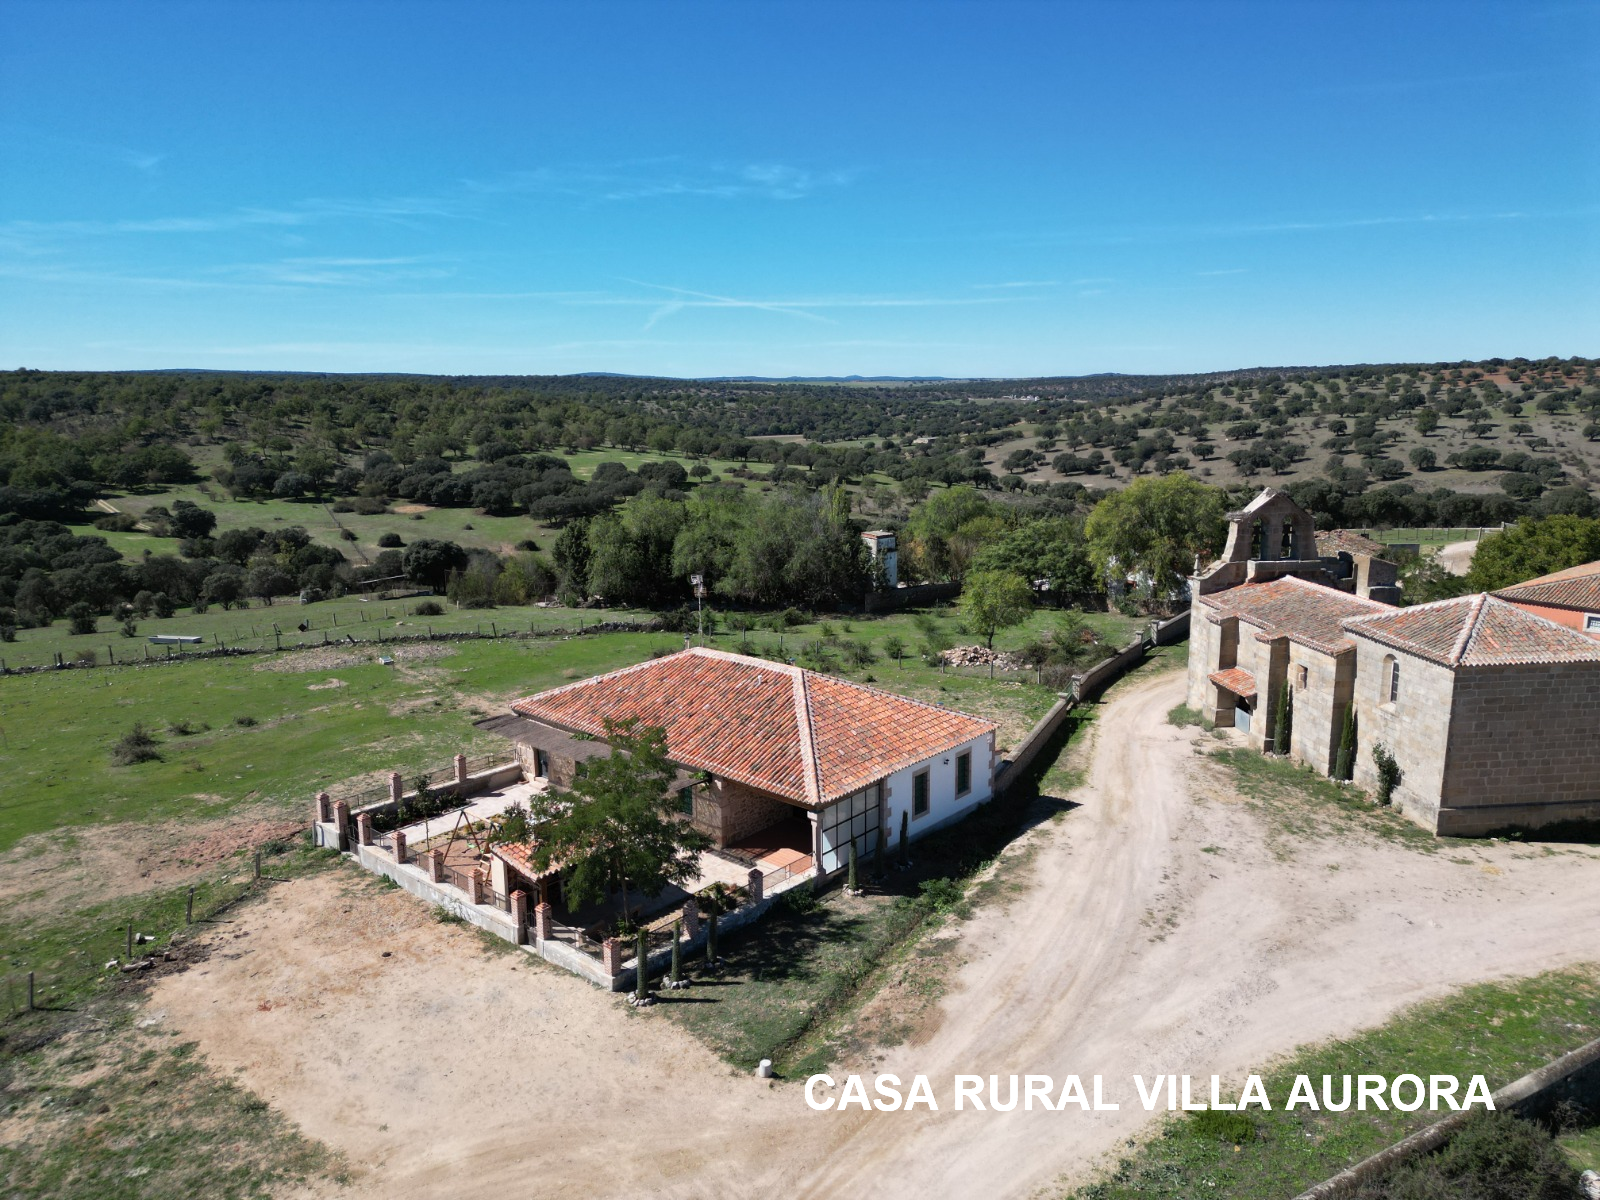 Casa Rural Villa Aurora